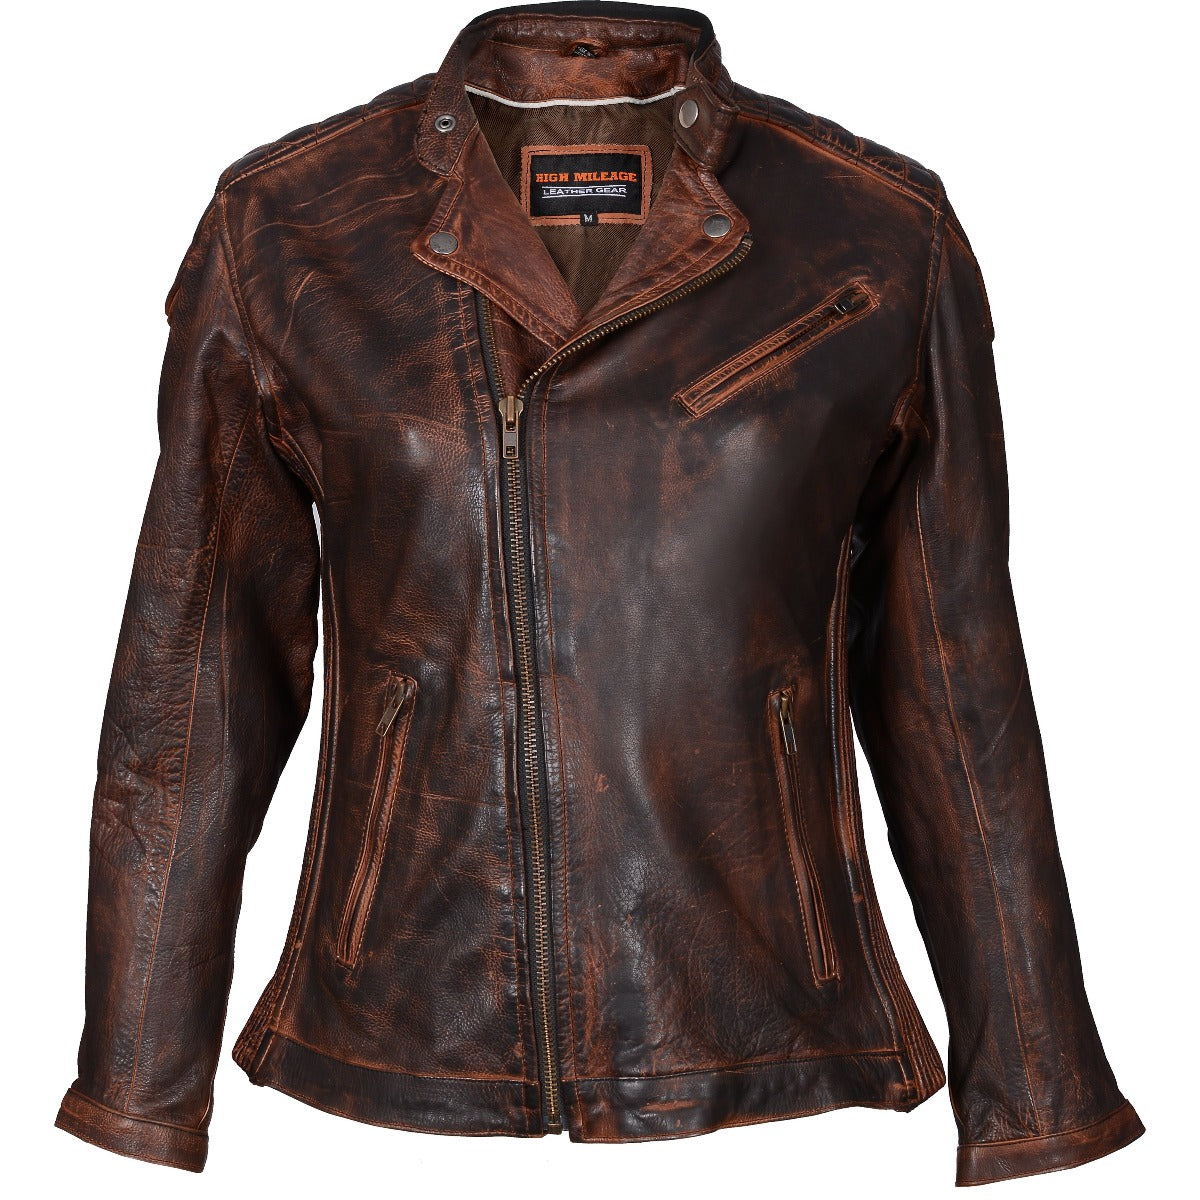 Vance High Mileage Ladies Vintage Brown Leather Jacket with Diamond Stitched Shoulders